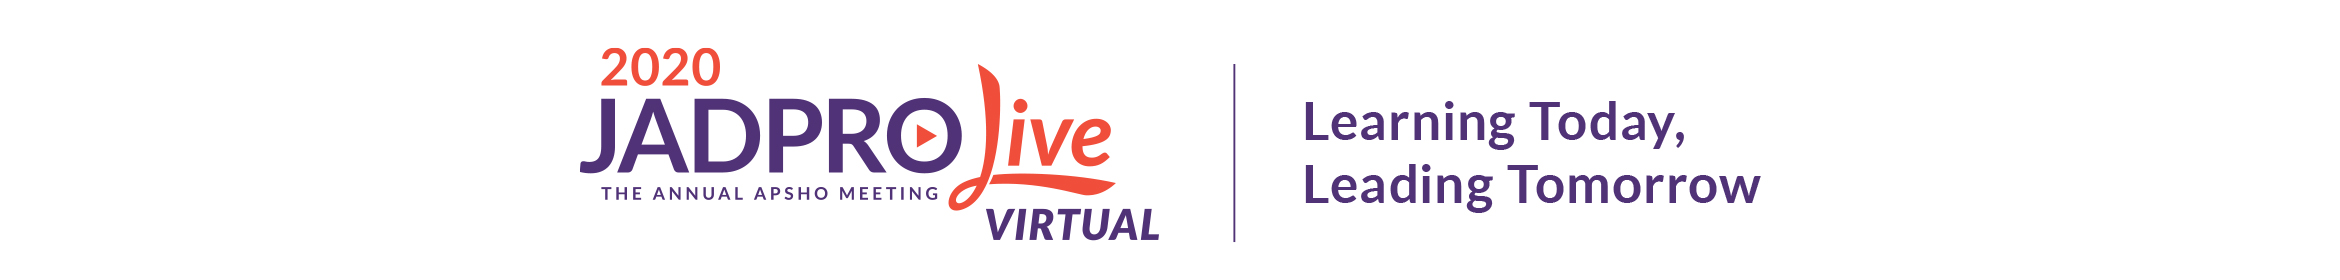 JADPRO Live 2020 Virtual Main banner